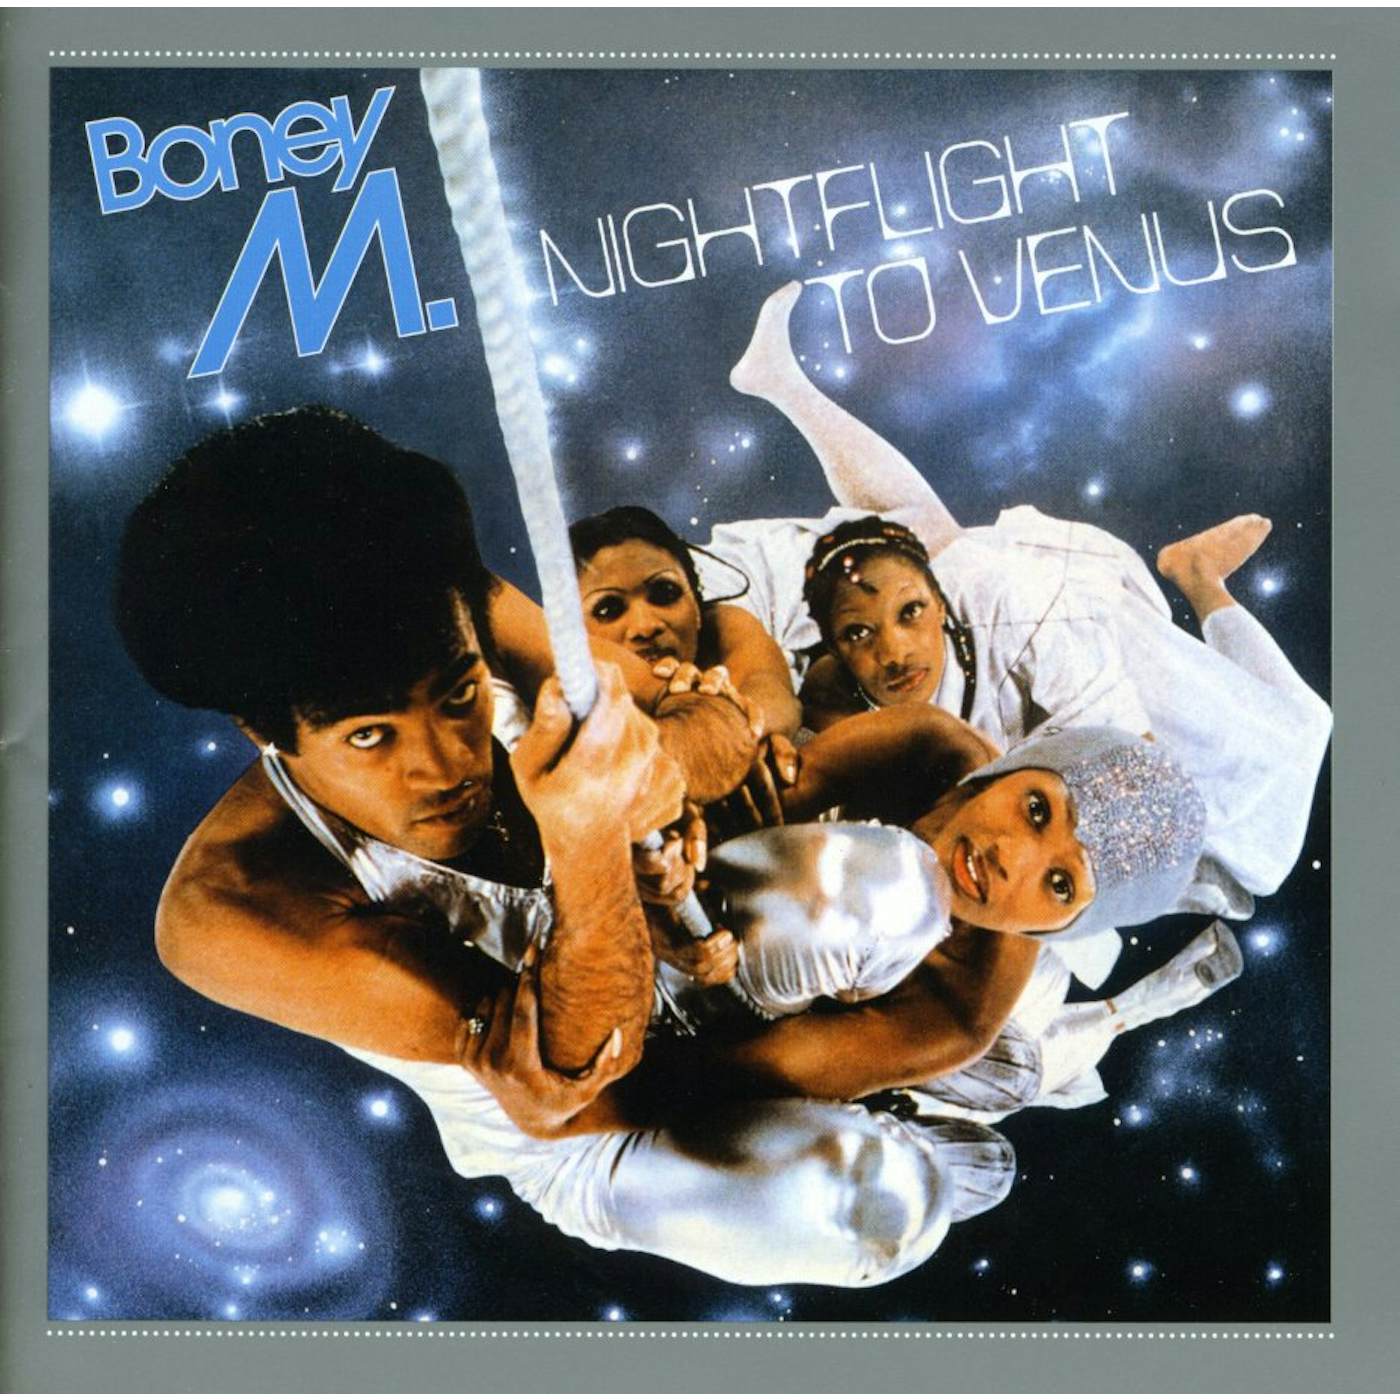 Boney M. NIGHTFLIGHT TO VENUS CD